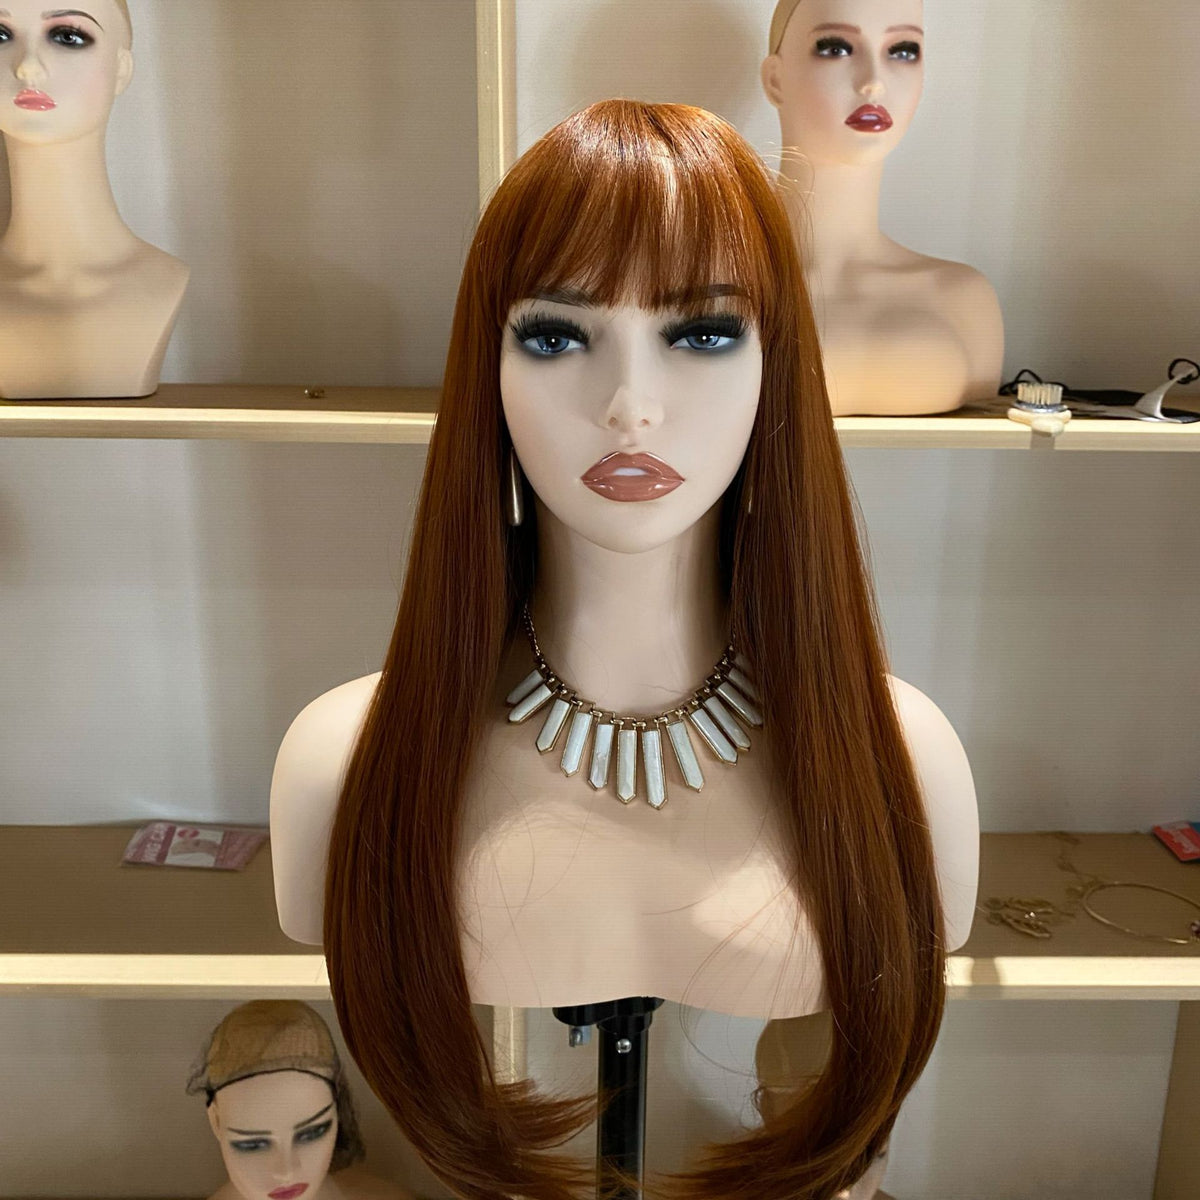 Female Half Body  Mannequin Head White Skin Jewelry Display Head Mold Wig Model